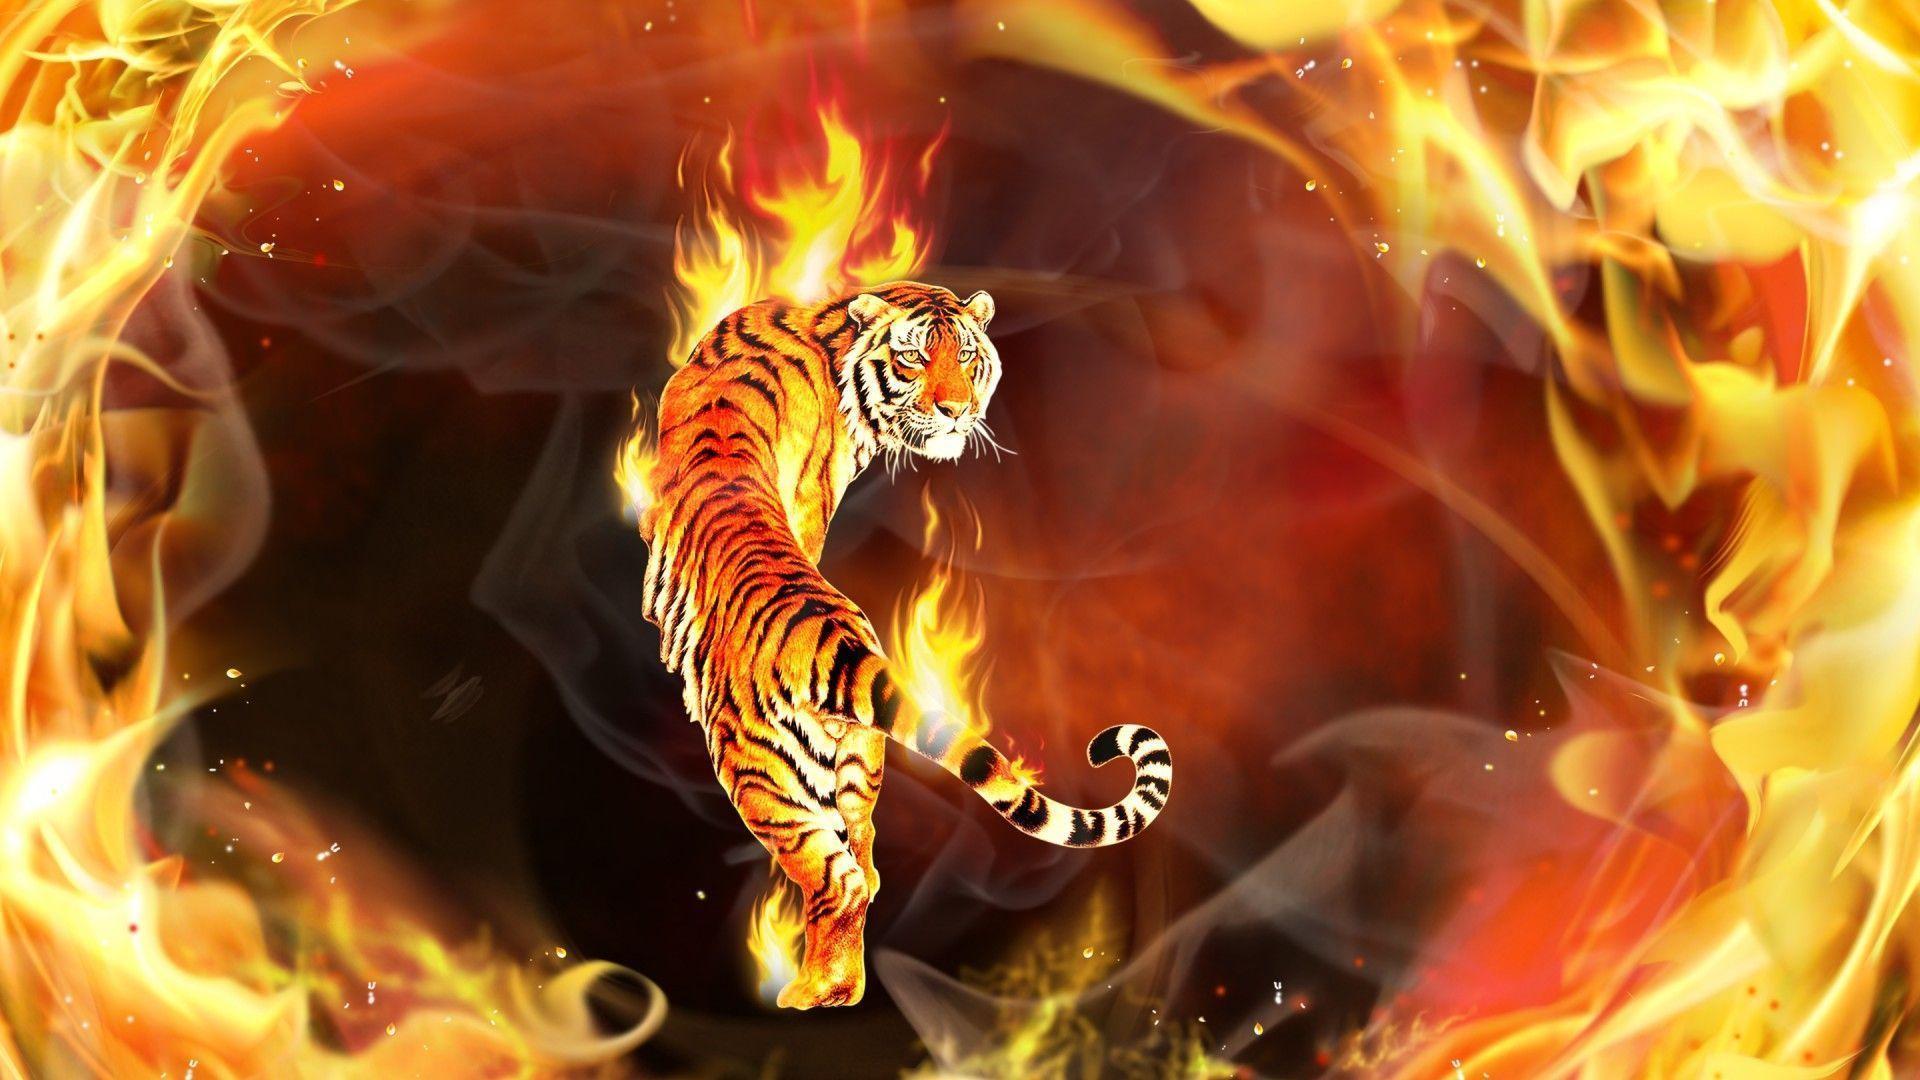 Tiger Pics for Desktop. Free Desk Wallpaper